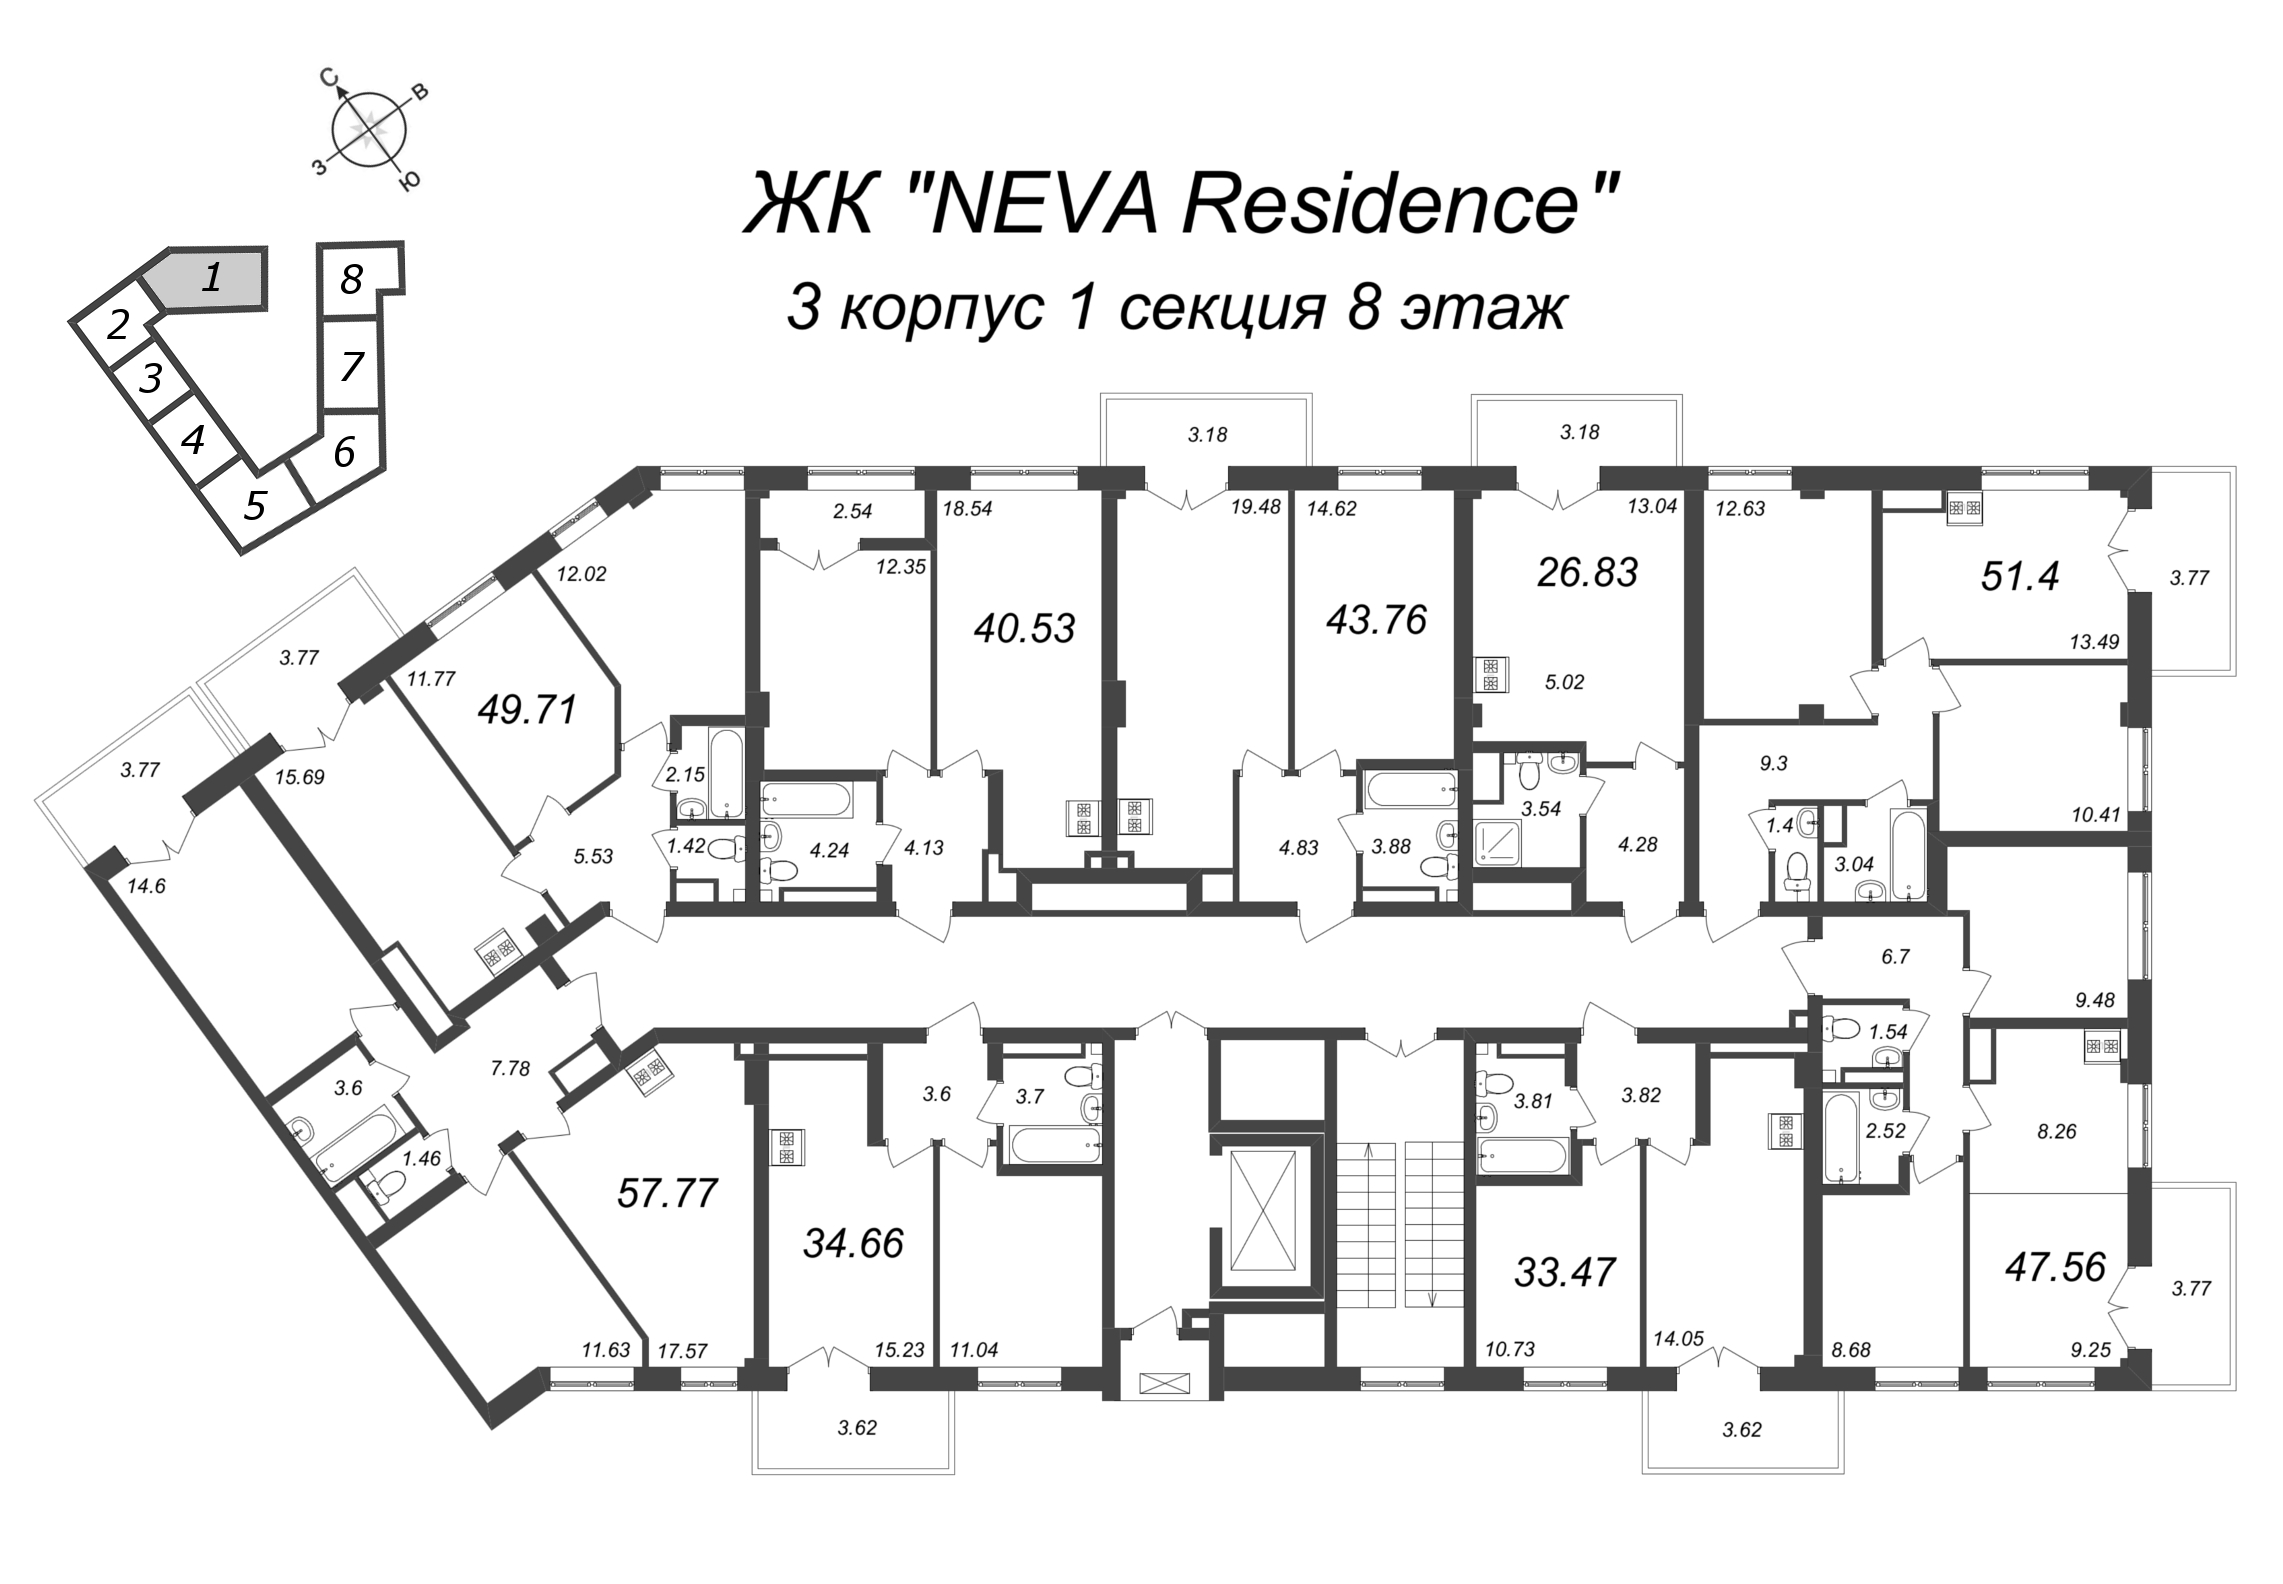 3-комнатная (Евро) квартира, 47.56 м² - планировка этажа